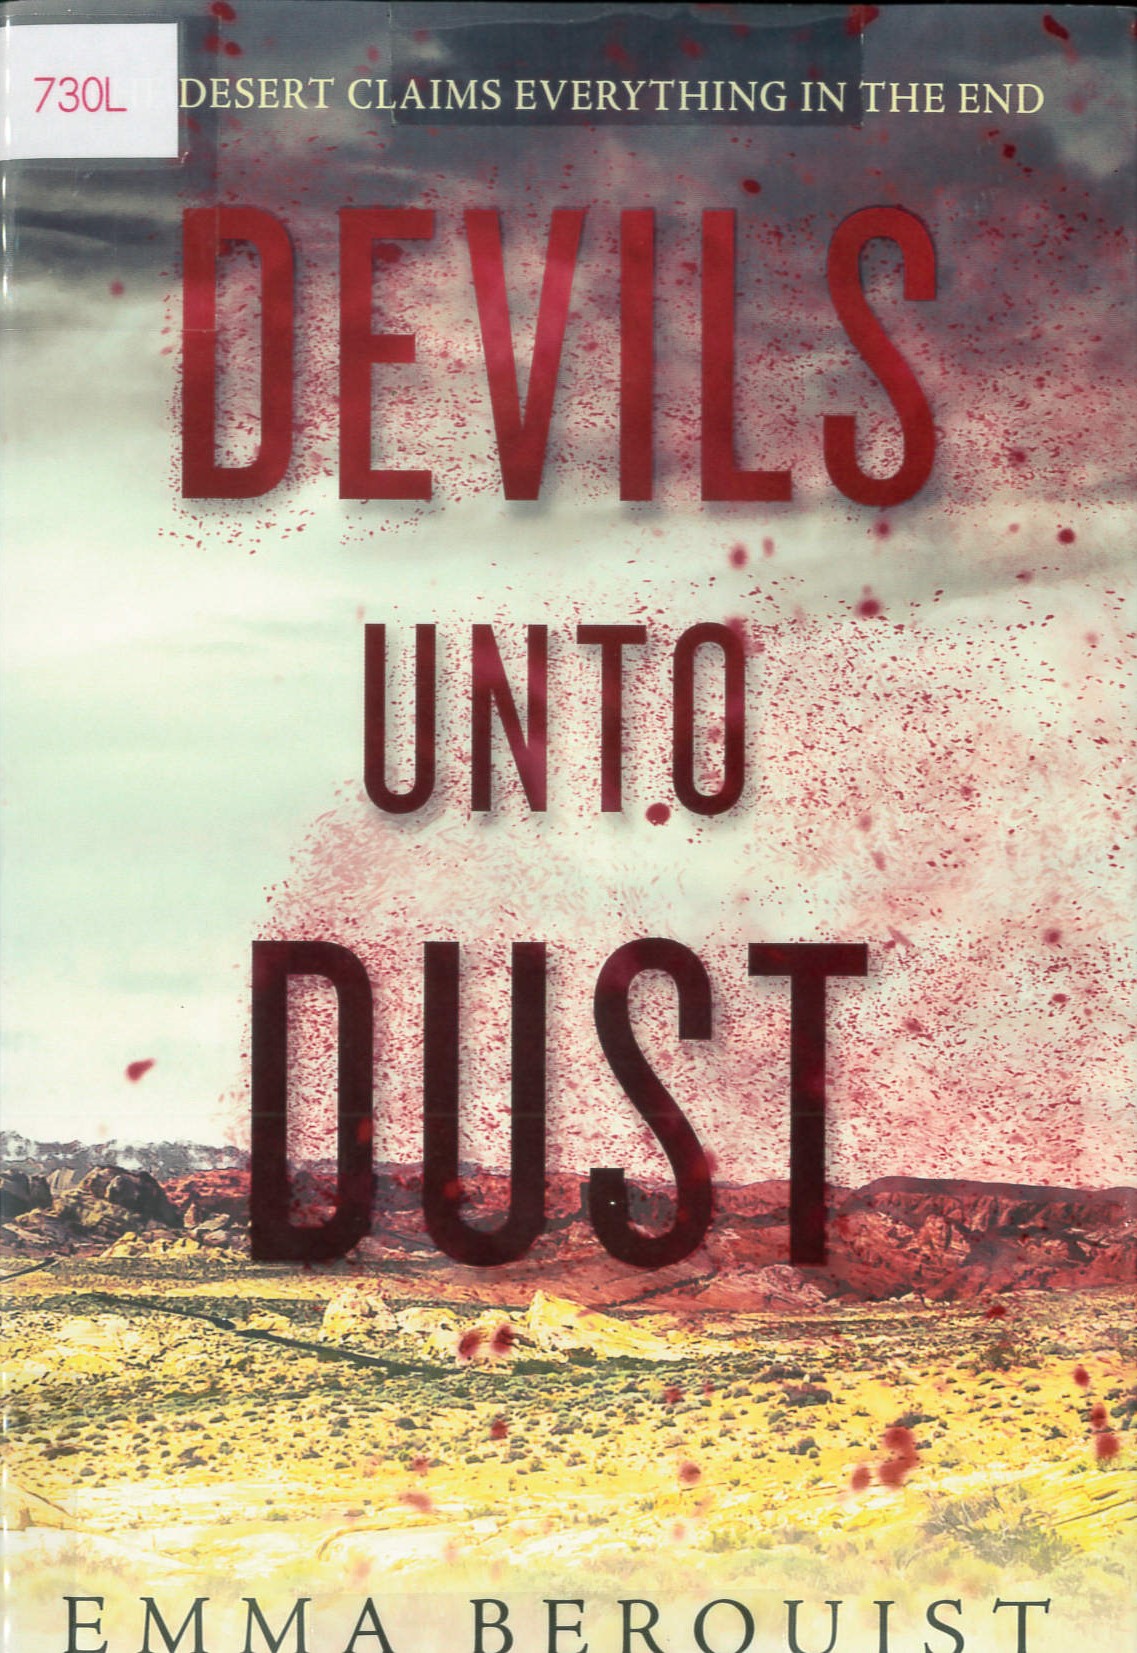 Devils unto dust /